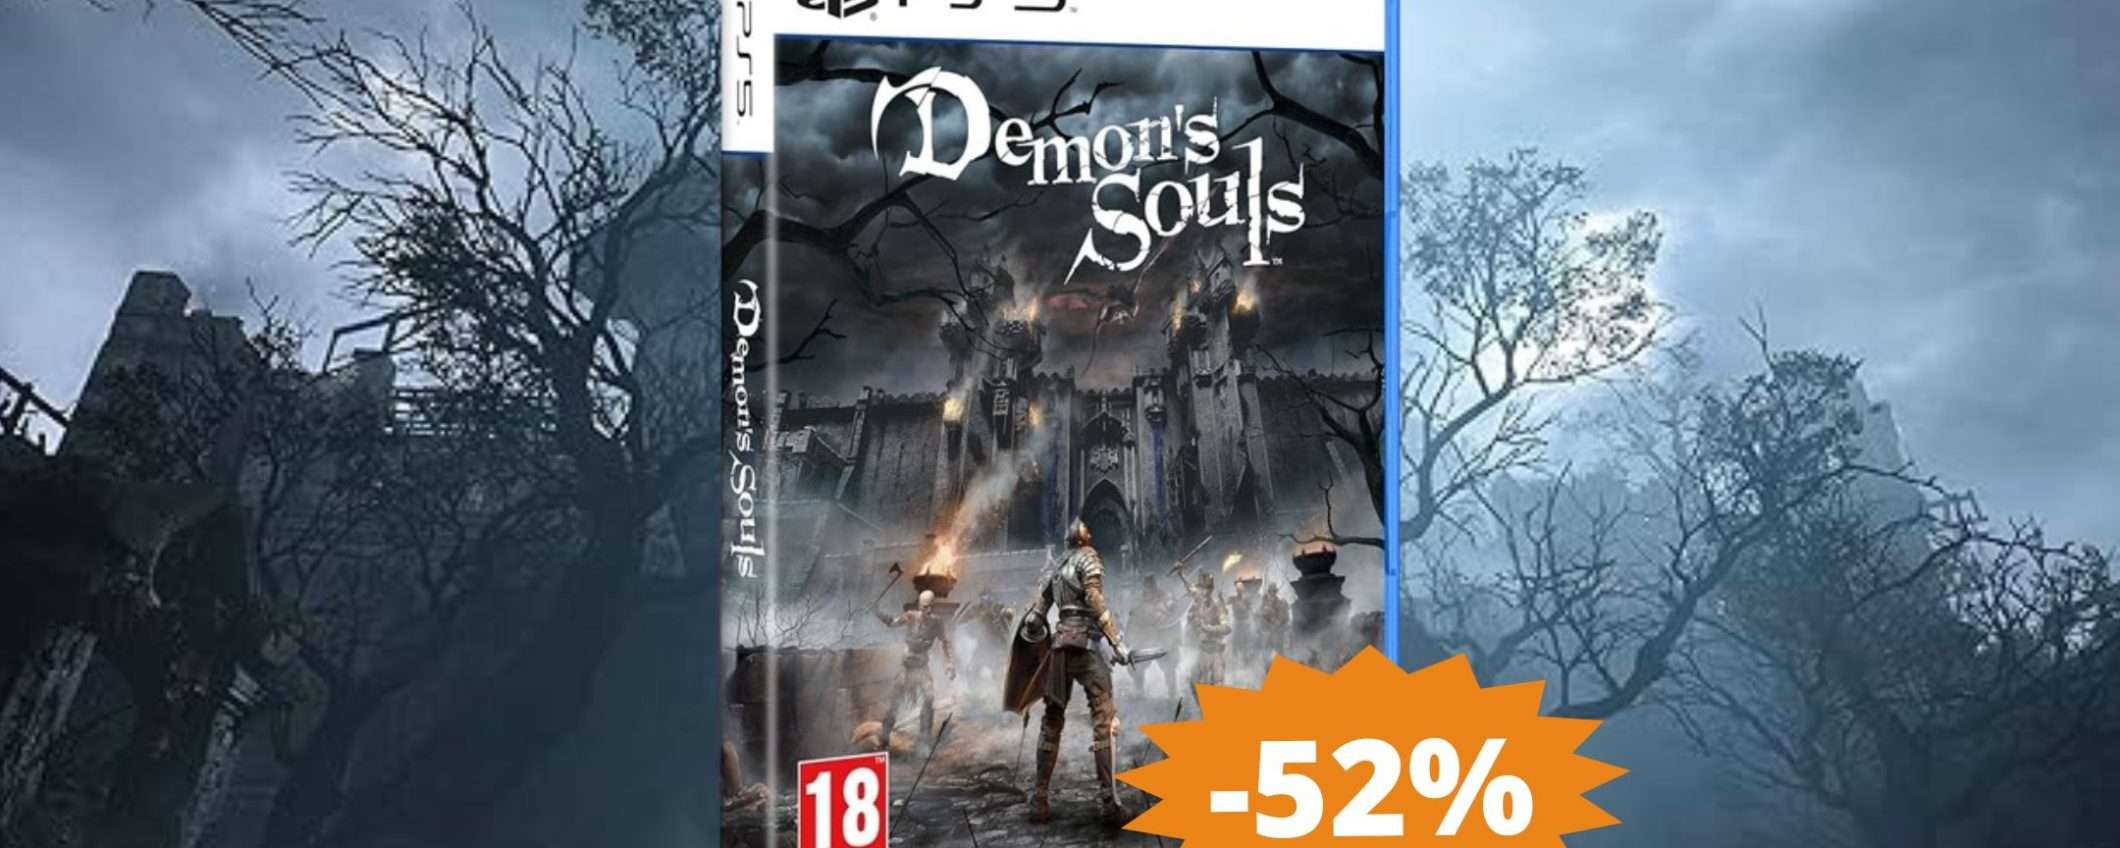 Demon's Souls per PS5: sconto EPICO del 52% su Amazon